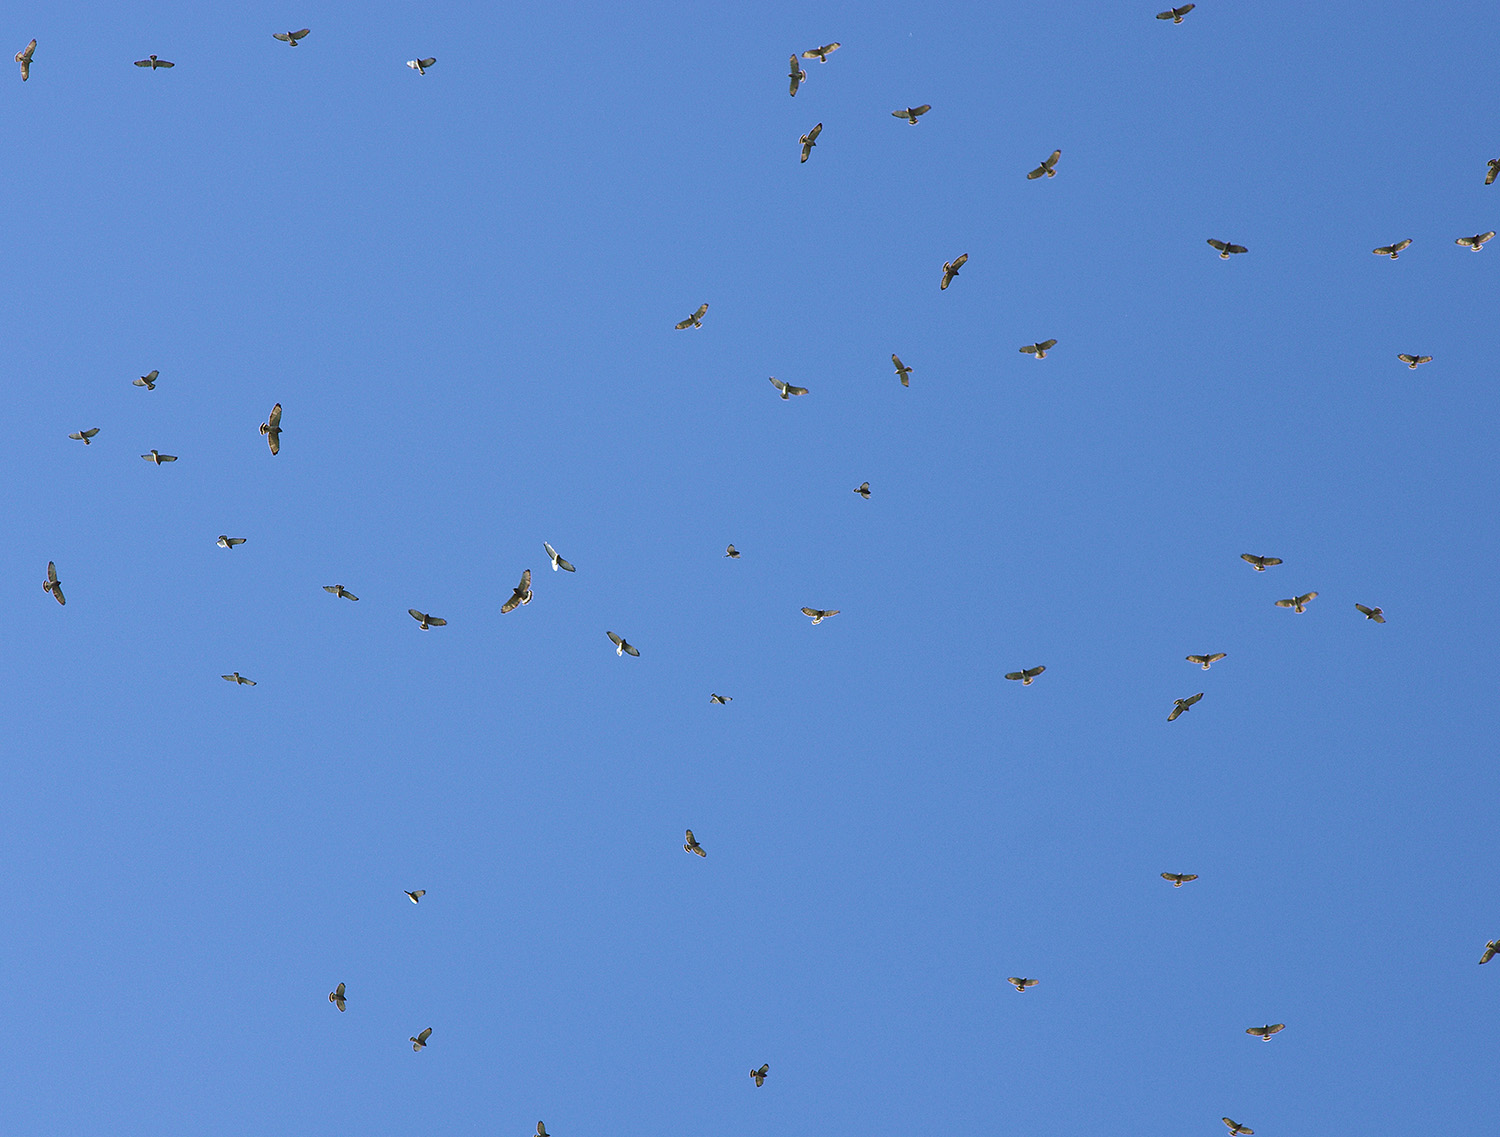 Dozens of birds circle above against a blue sky